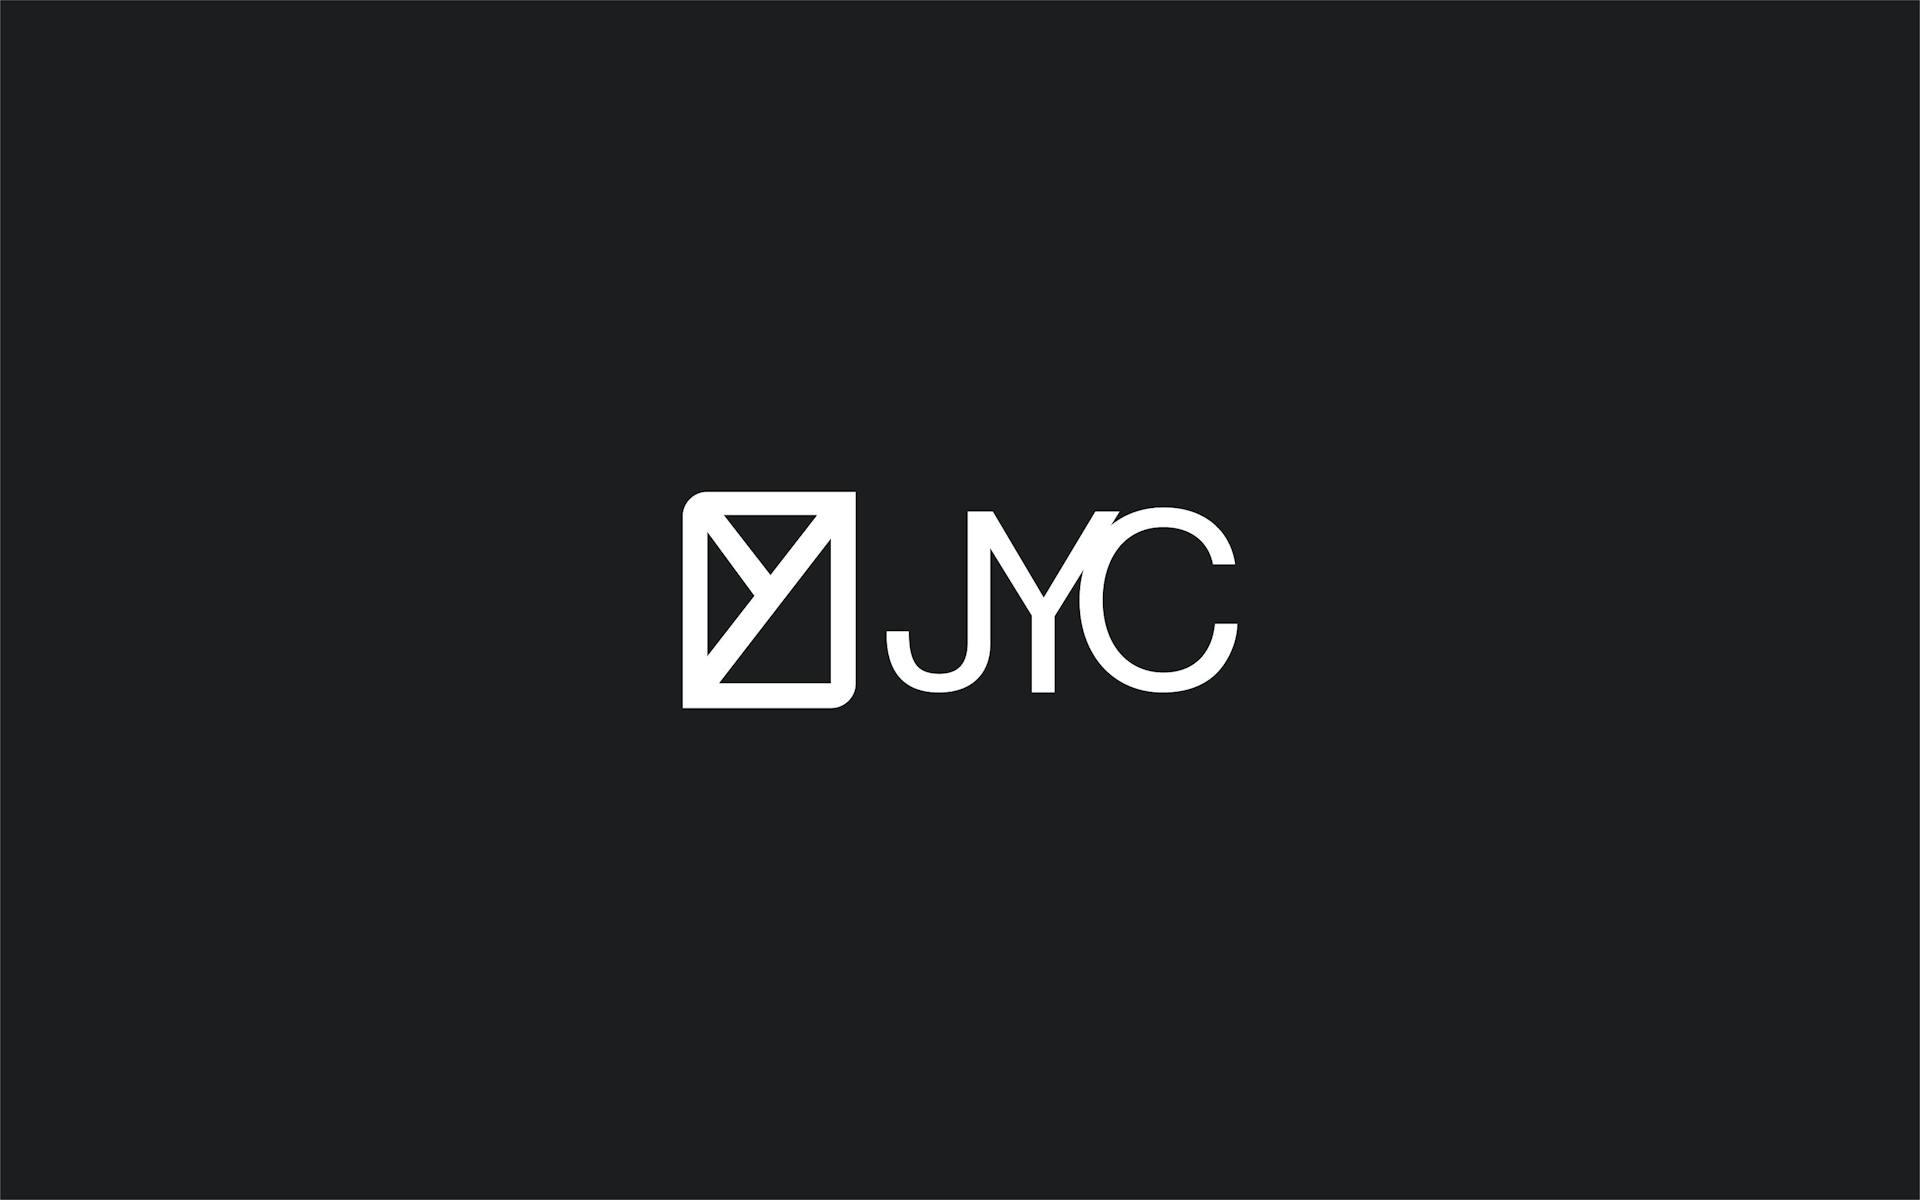 Web Design & Development - JYC